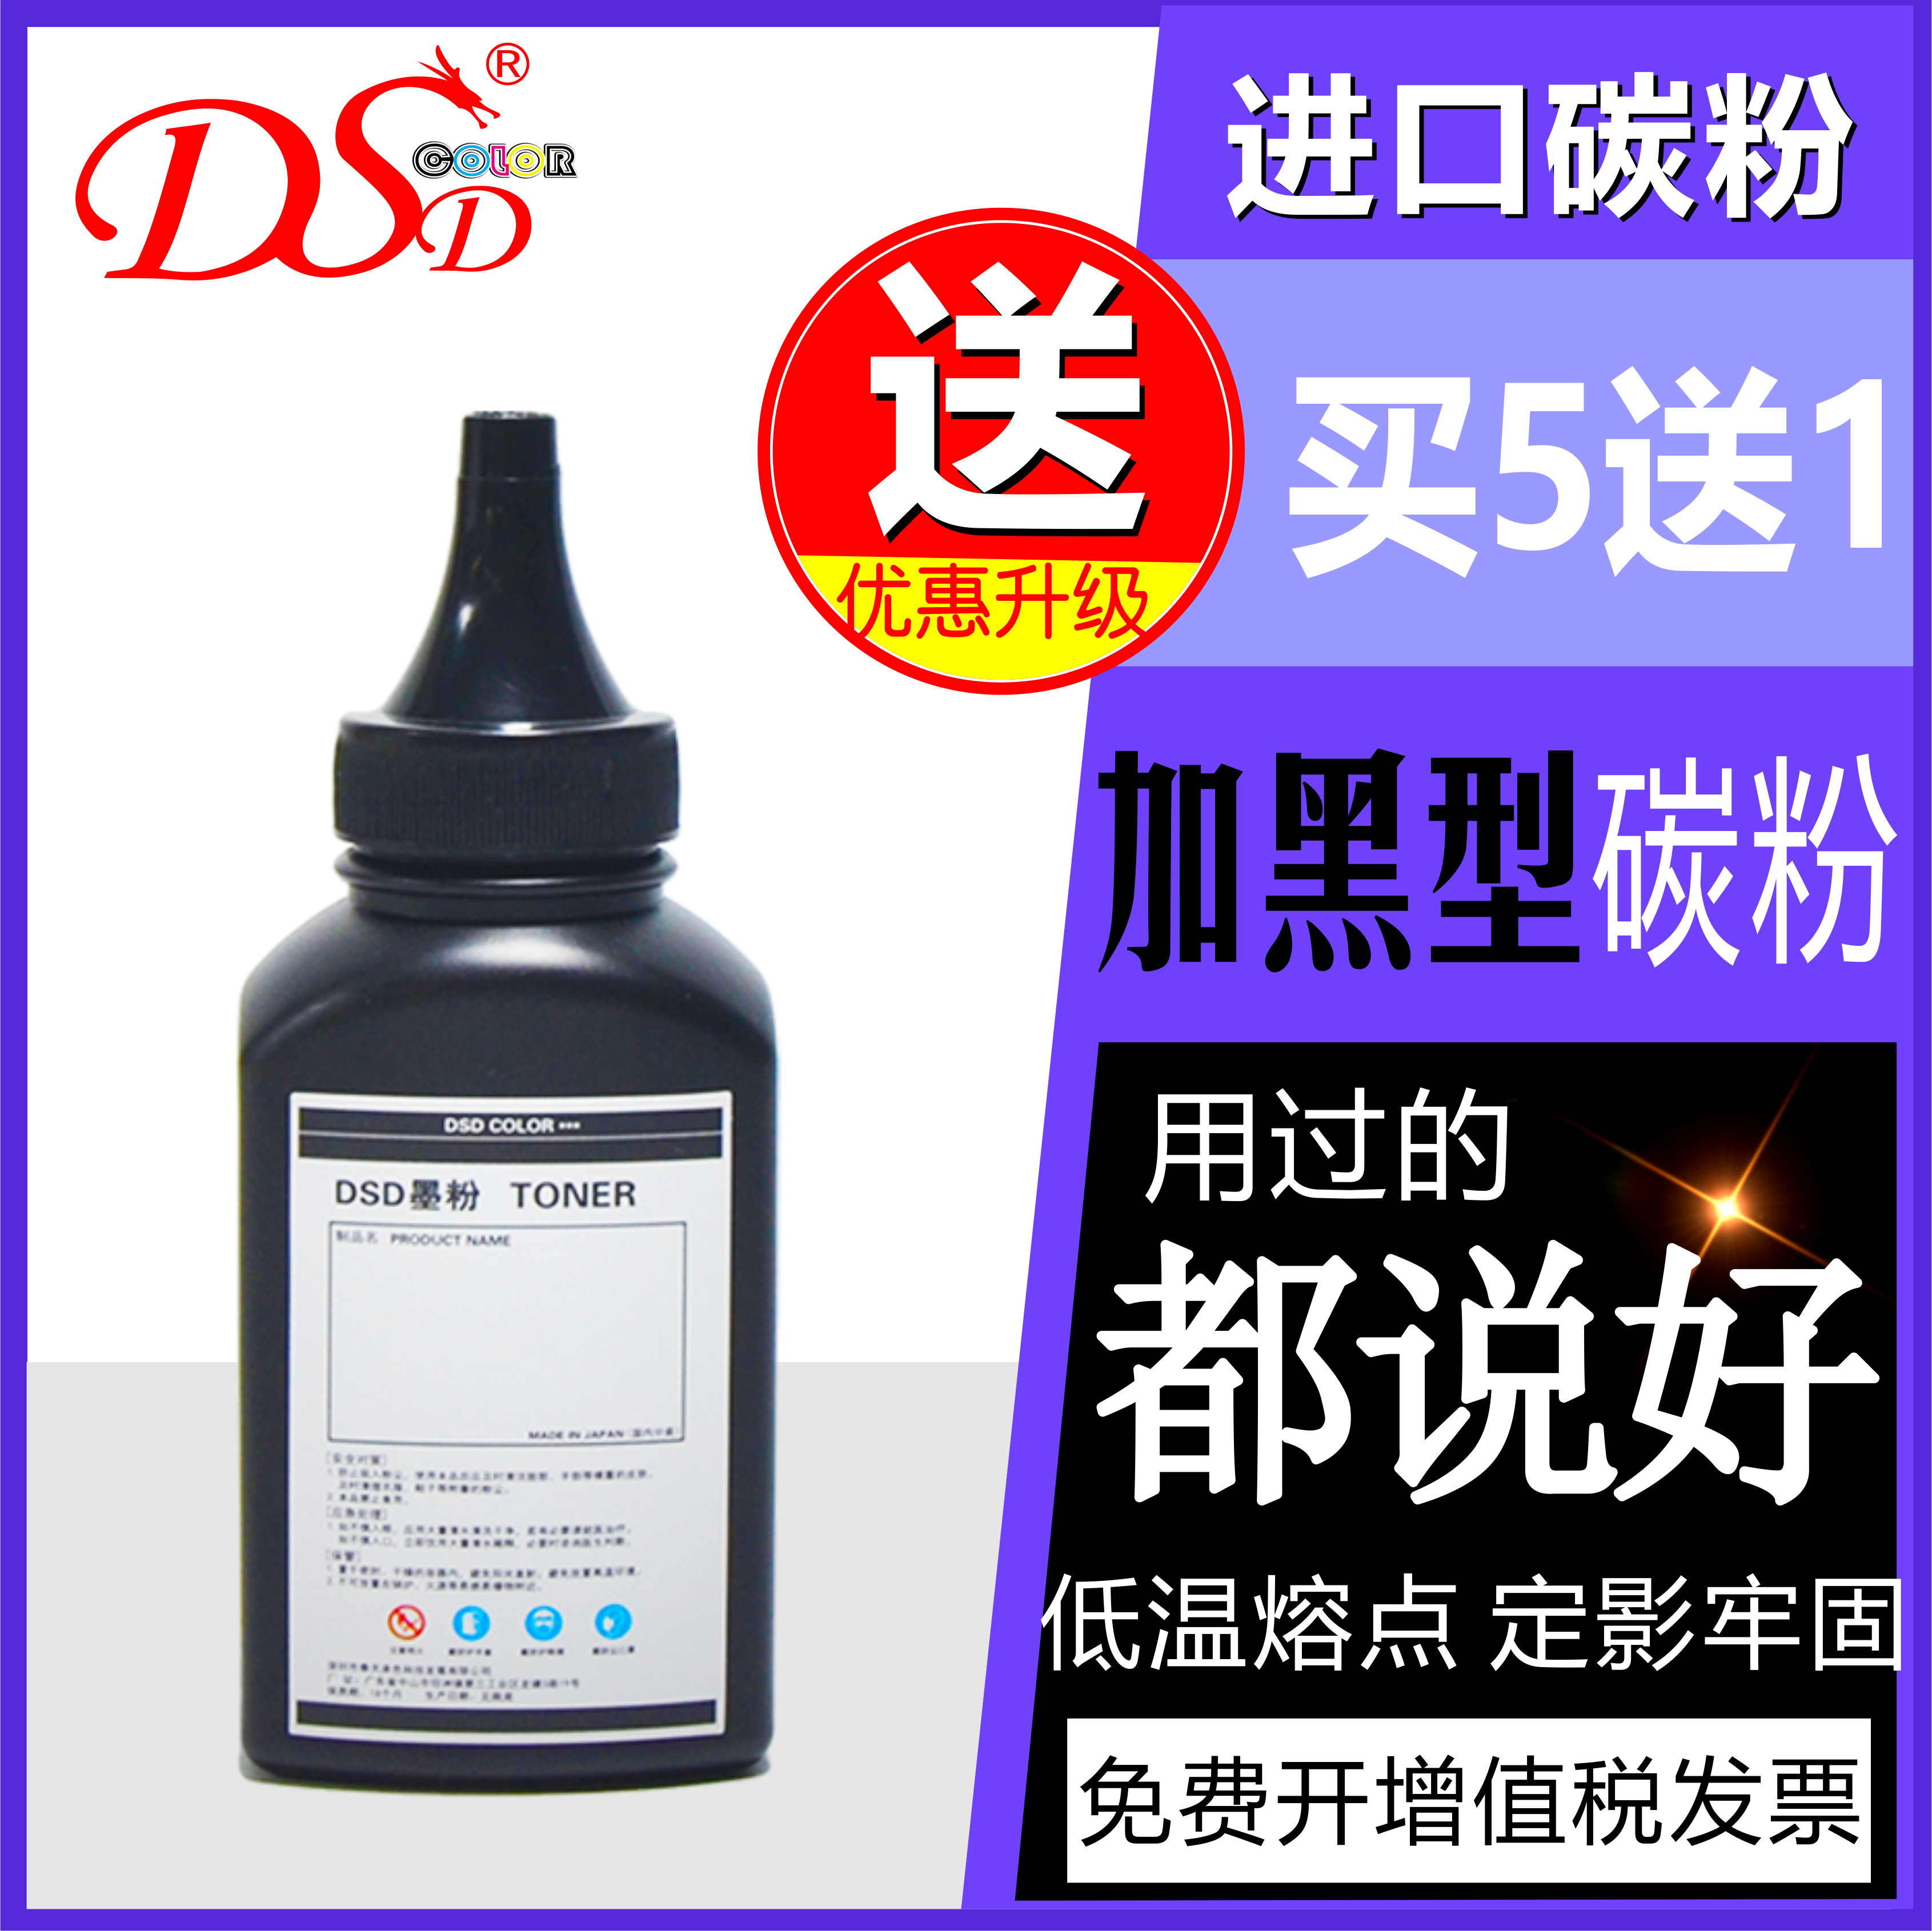 DSD Color 适用联想LJ1900进口墨粉LENOVO LT2519黑色碳粉 办公设备/耗材/相关服务 墨粉/碳粉 原图主图